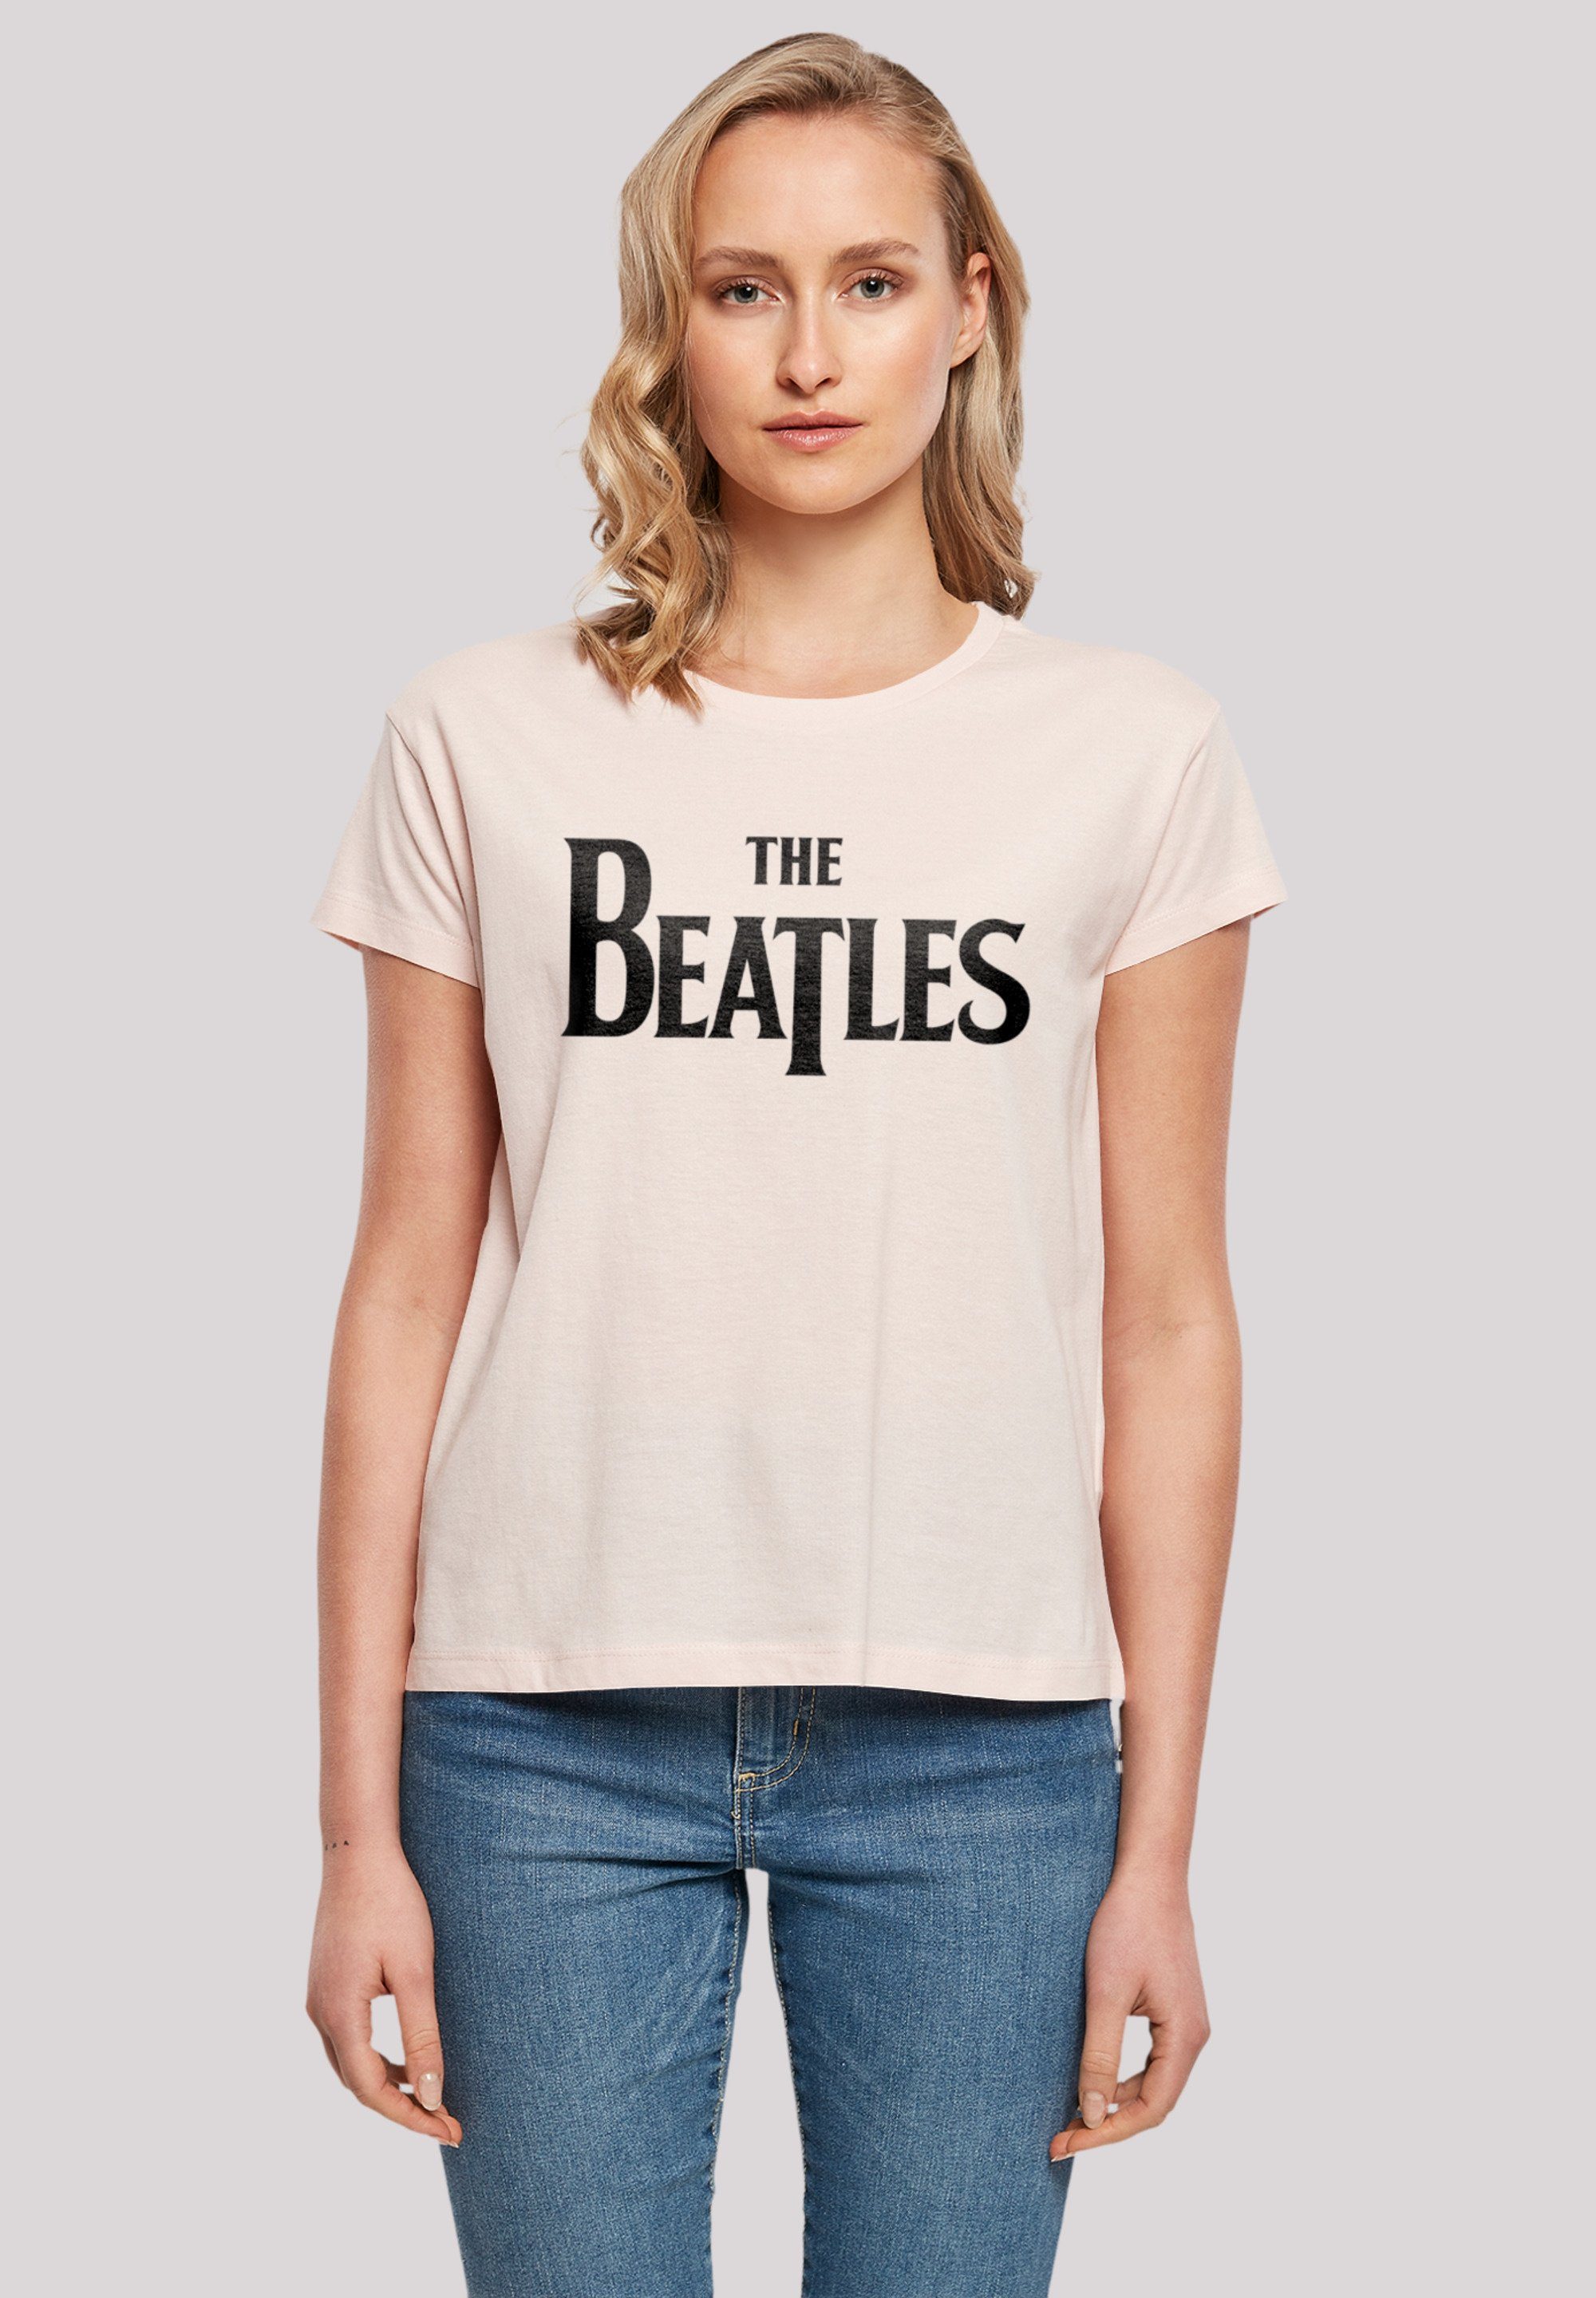 Perfekte und F4NT4STIC Print, The Verarbeitung Logo T-Shirt Passform hochwertige Beatles